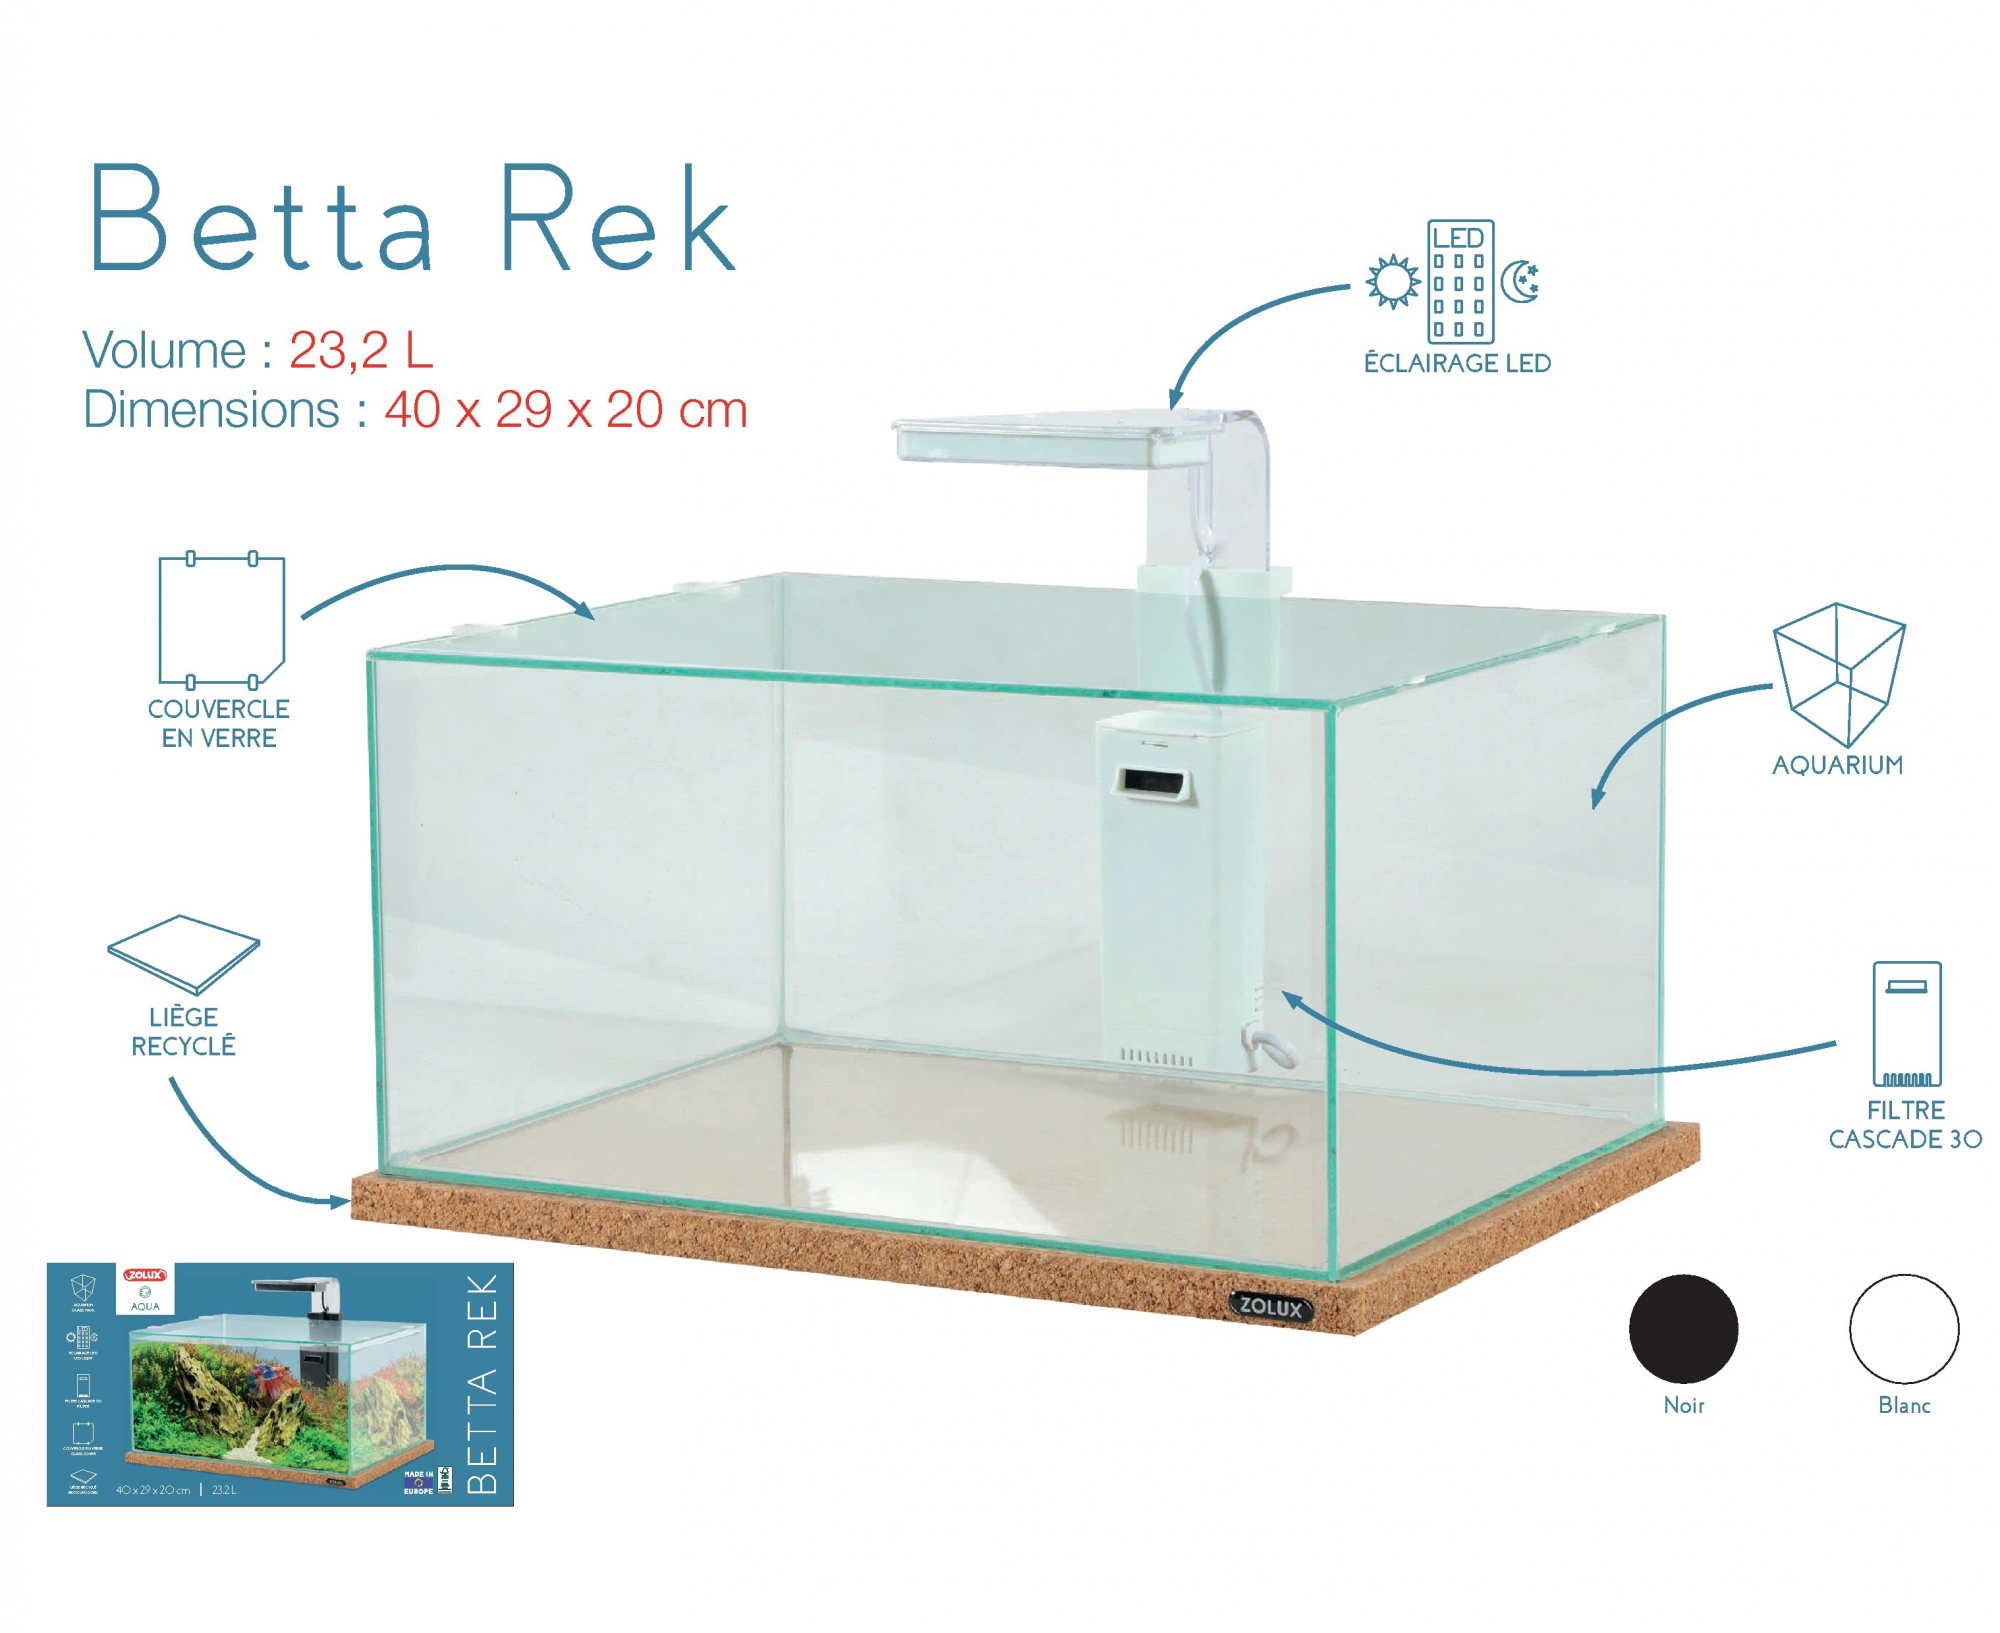 Kit aquarium Betta Rek - 23,2 L - blanc ou noir